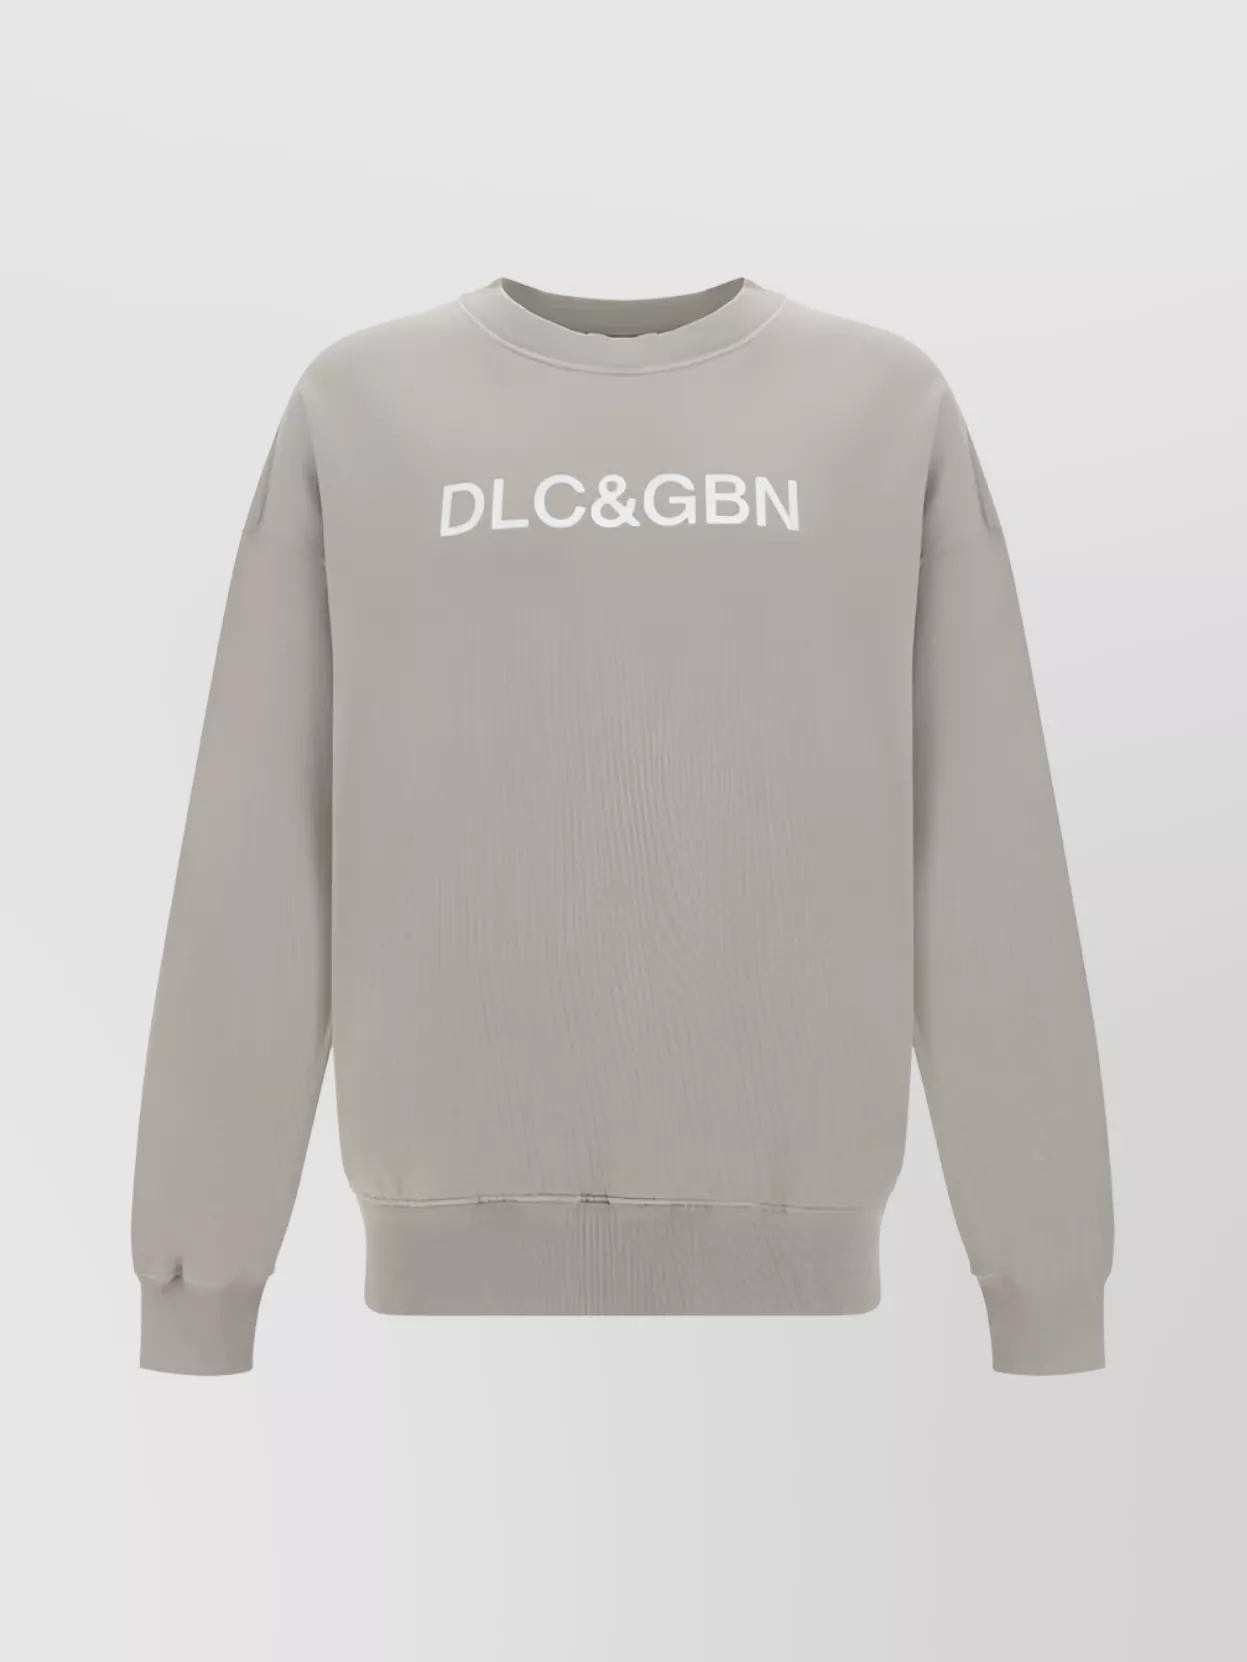 Dolce & Gabbana Crew Neck Cotton Sweater In Gray